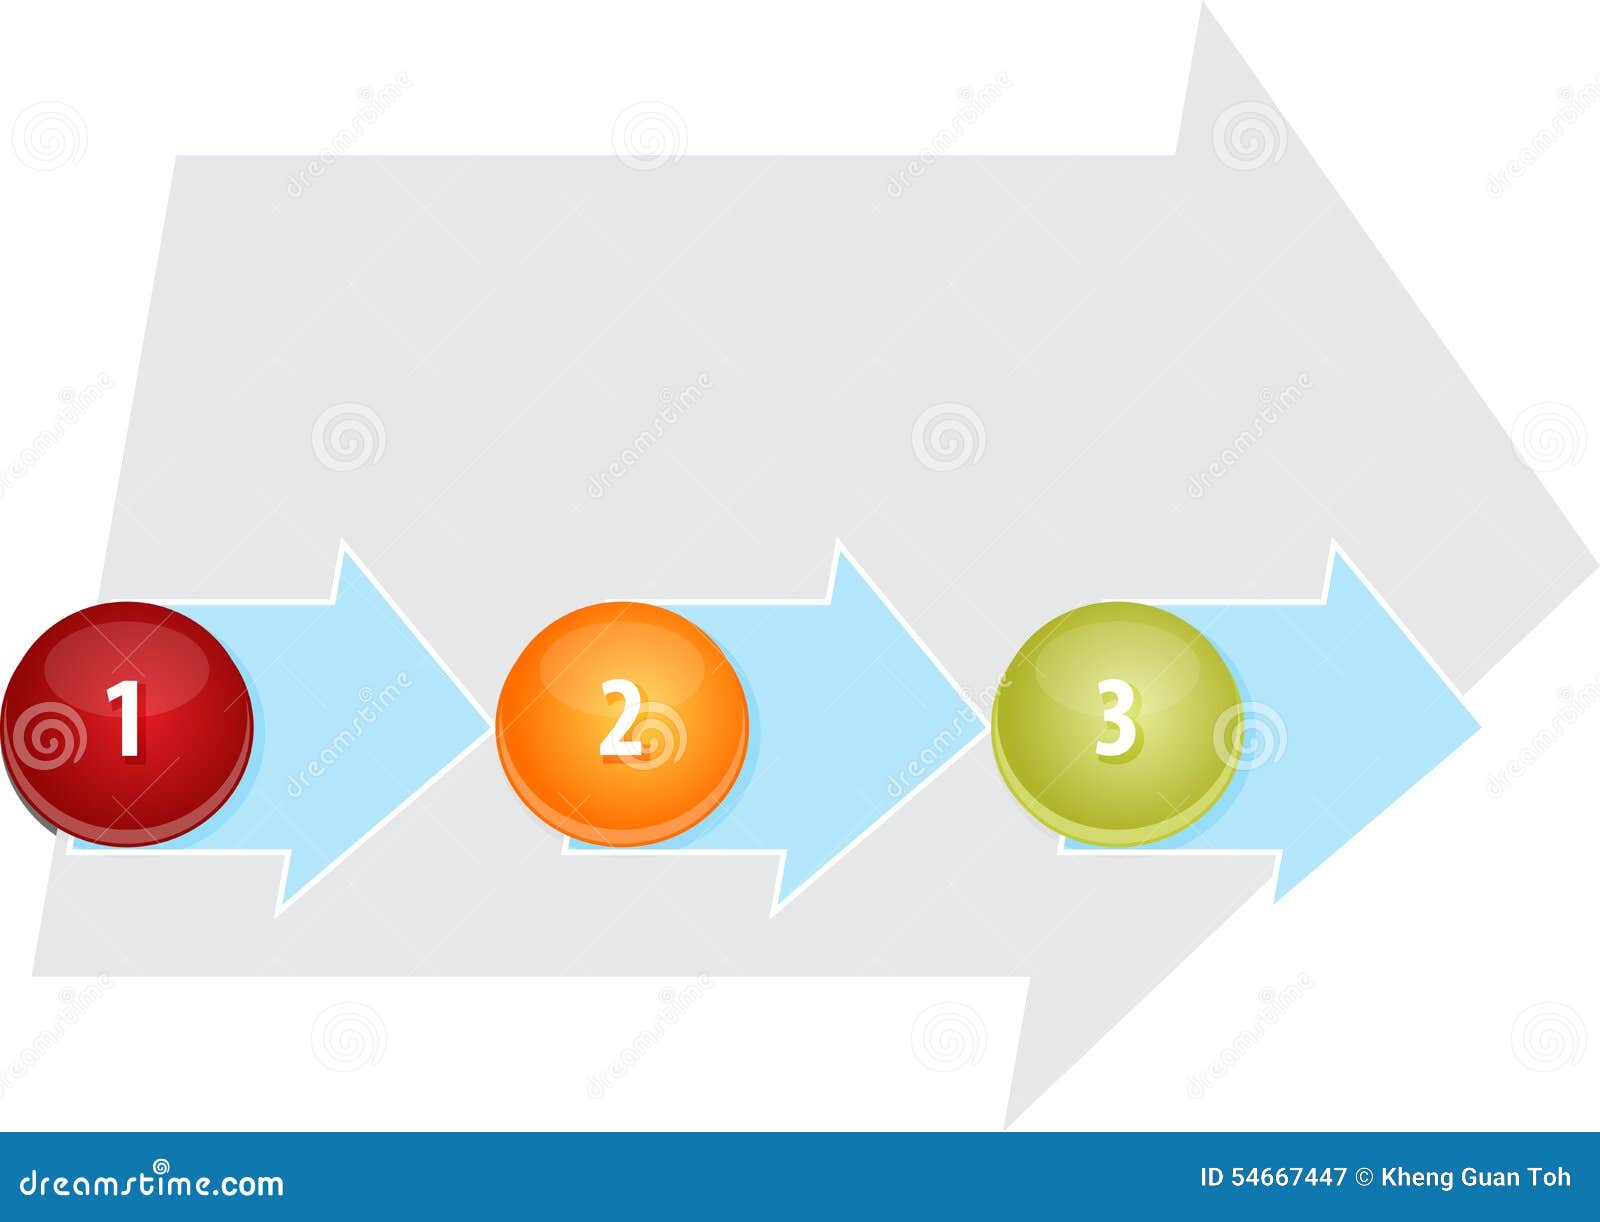 Three Blank Process Business Diagram Illustration Stock Illustration ...